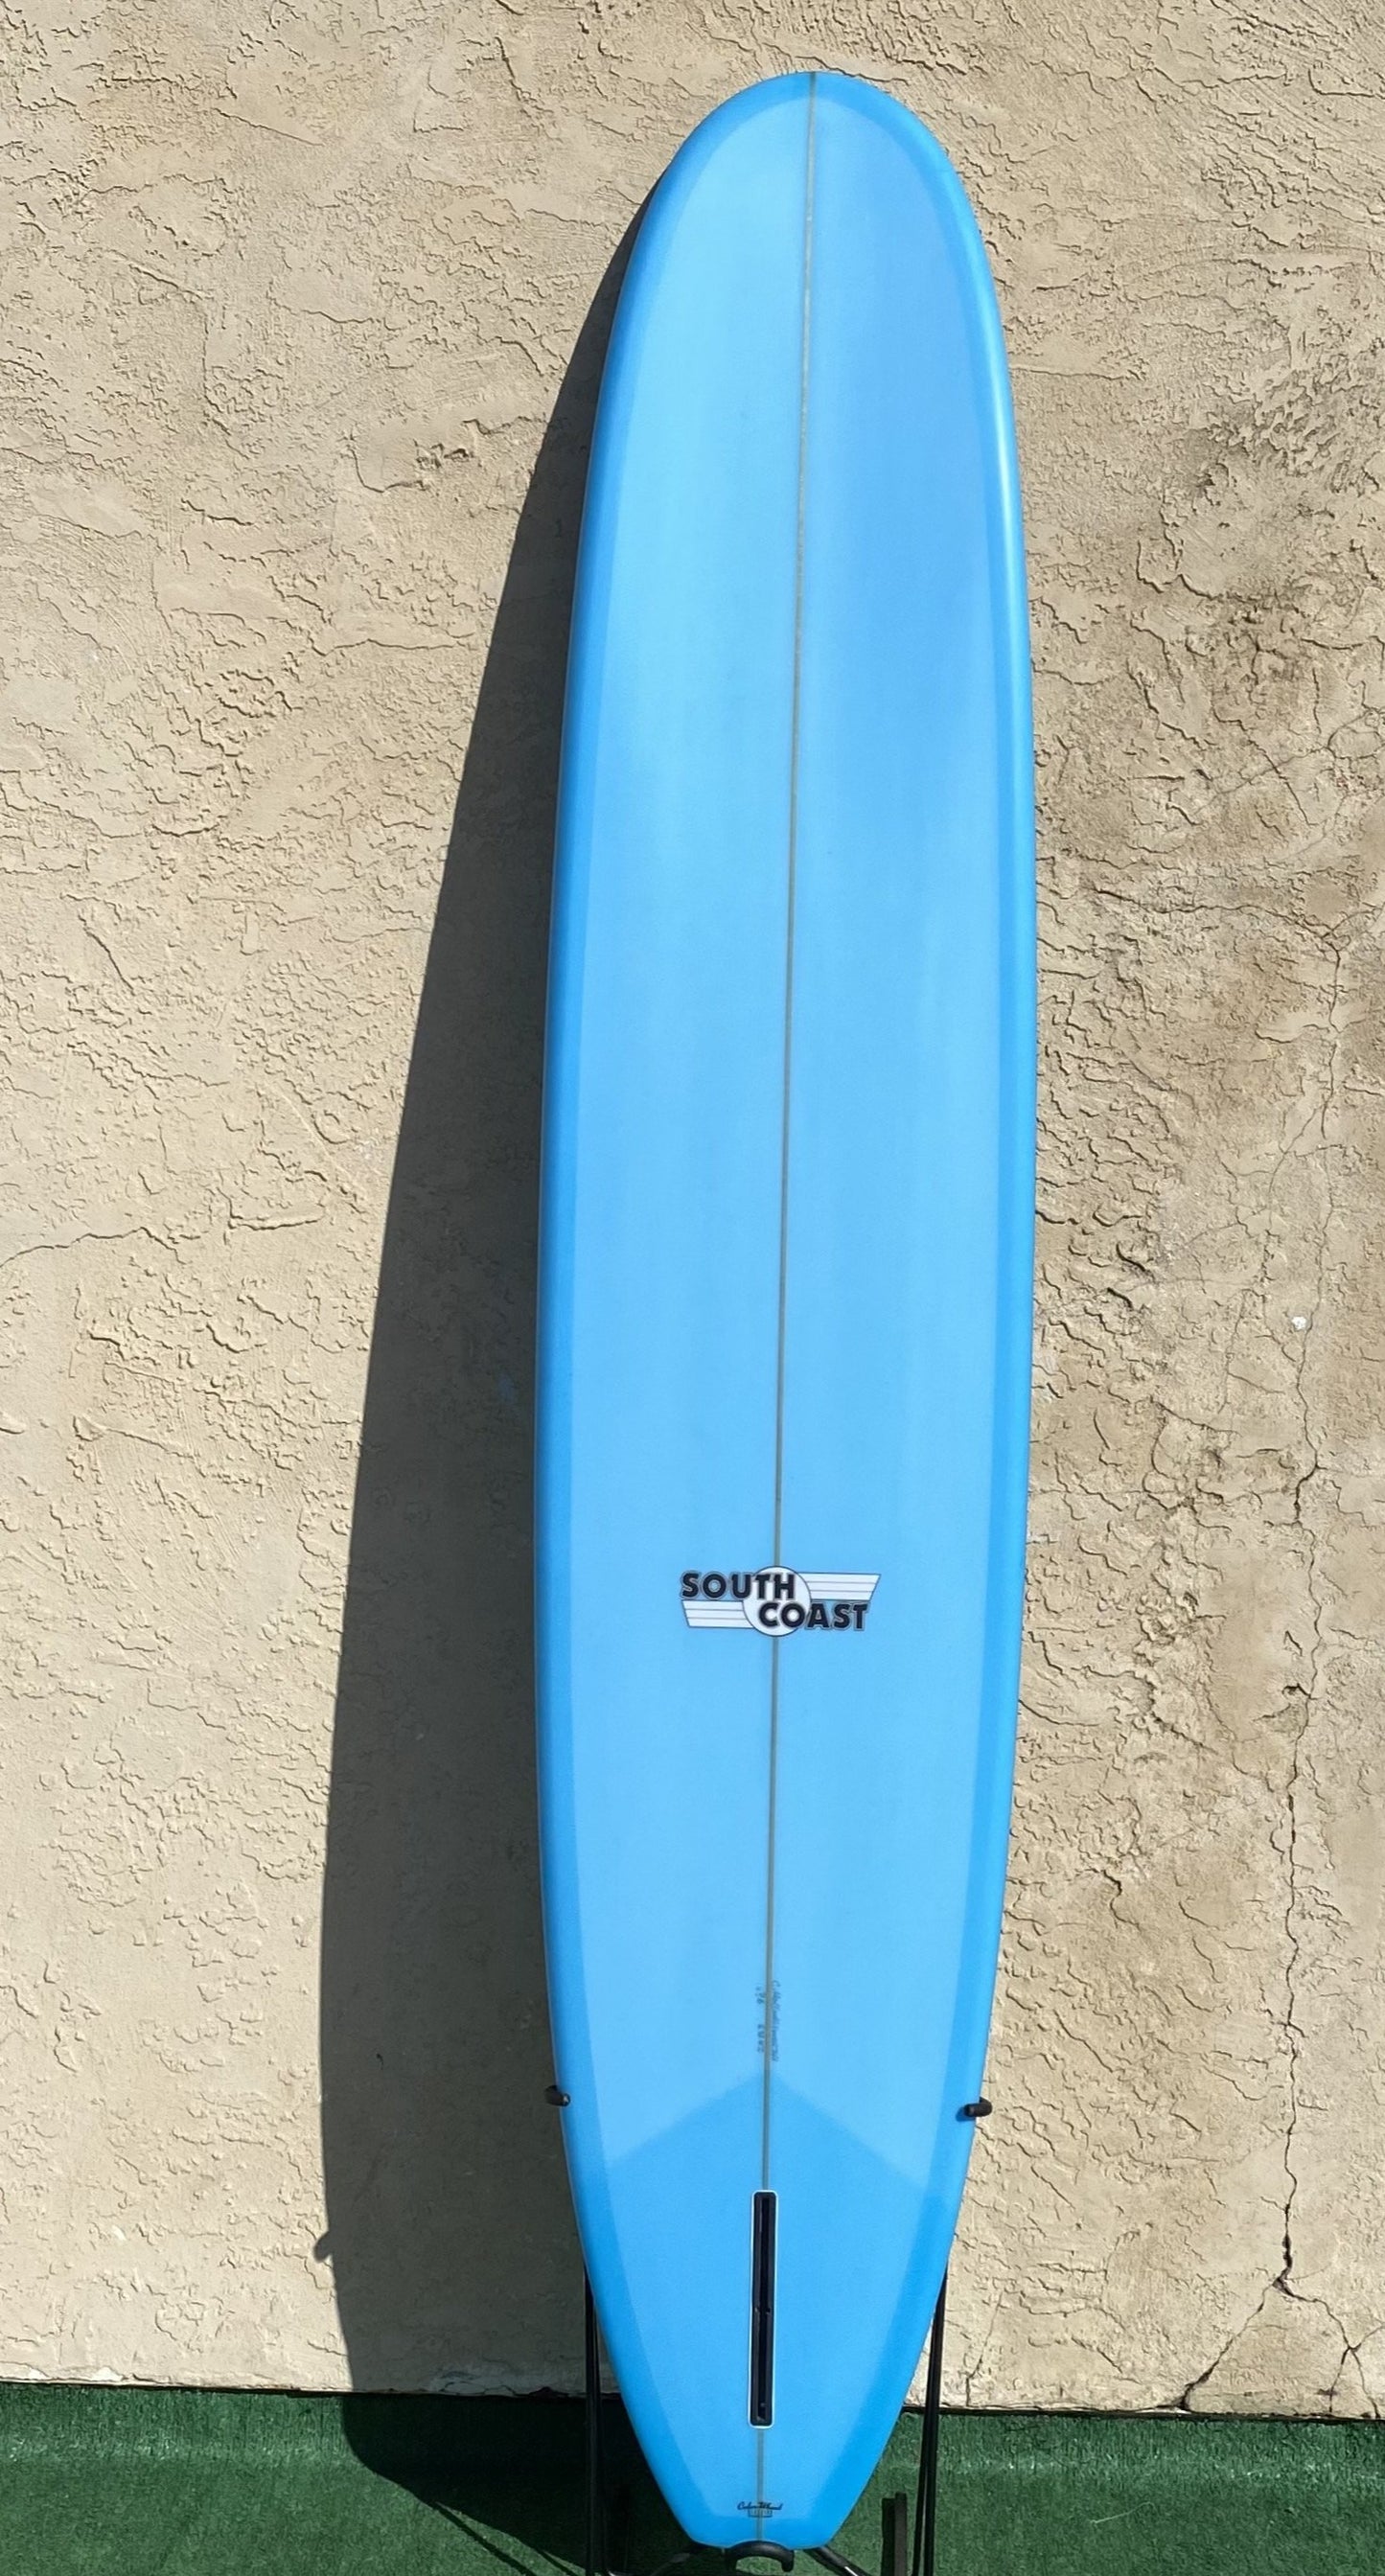 SOUTH COAST MALIBU SURFBOARD 9'6"